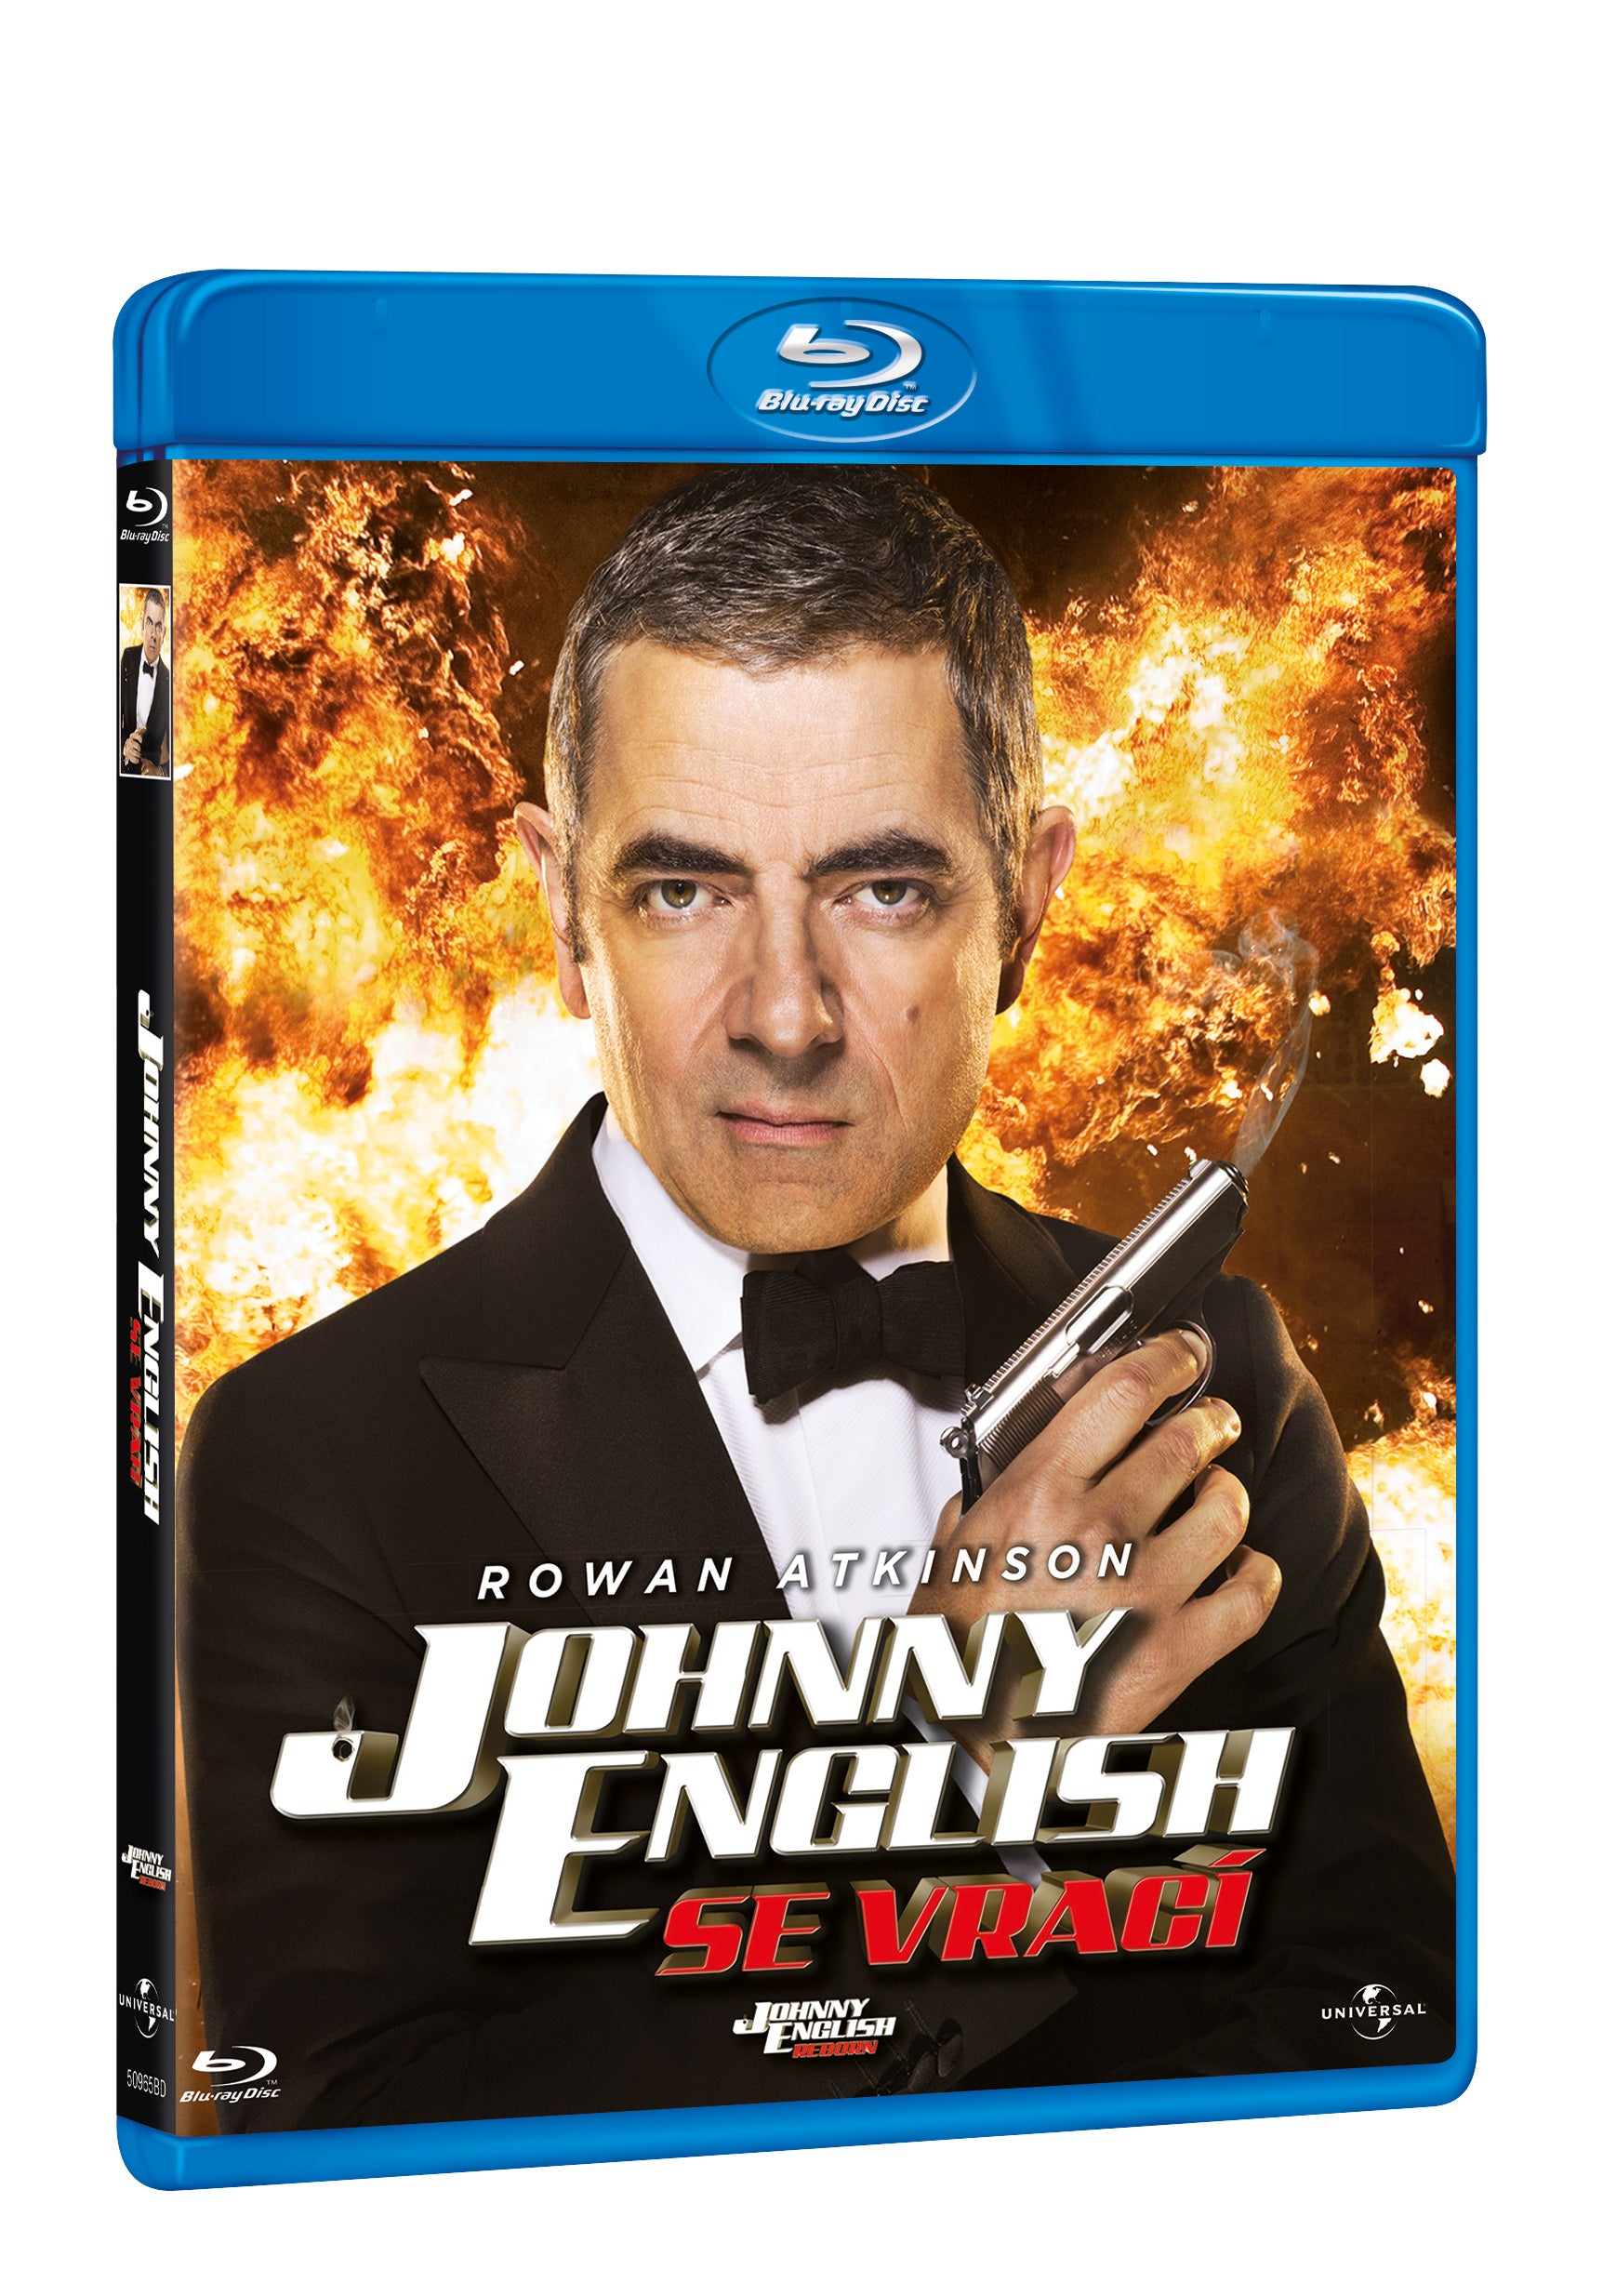 Johnny English se vraci BD / Johnny English Reborn - Czech version